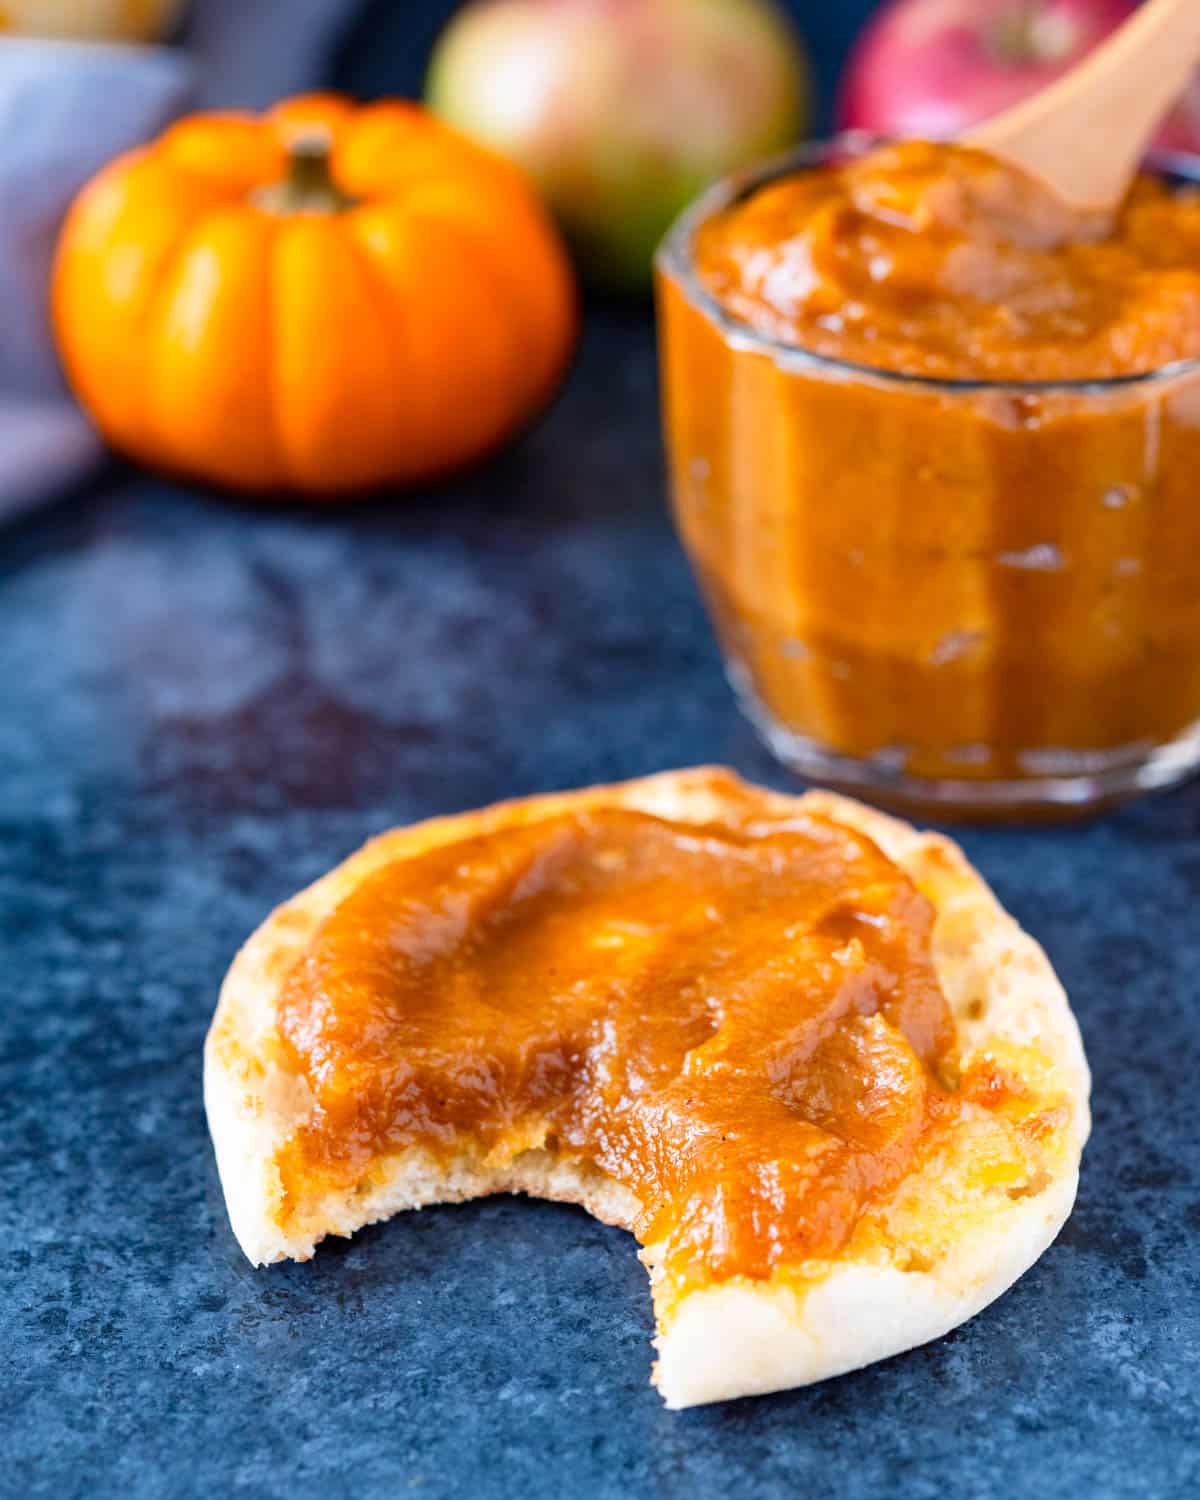 Spreading apple pumpkin butter on an English muffin.